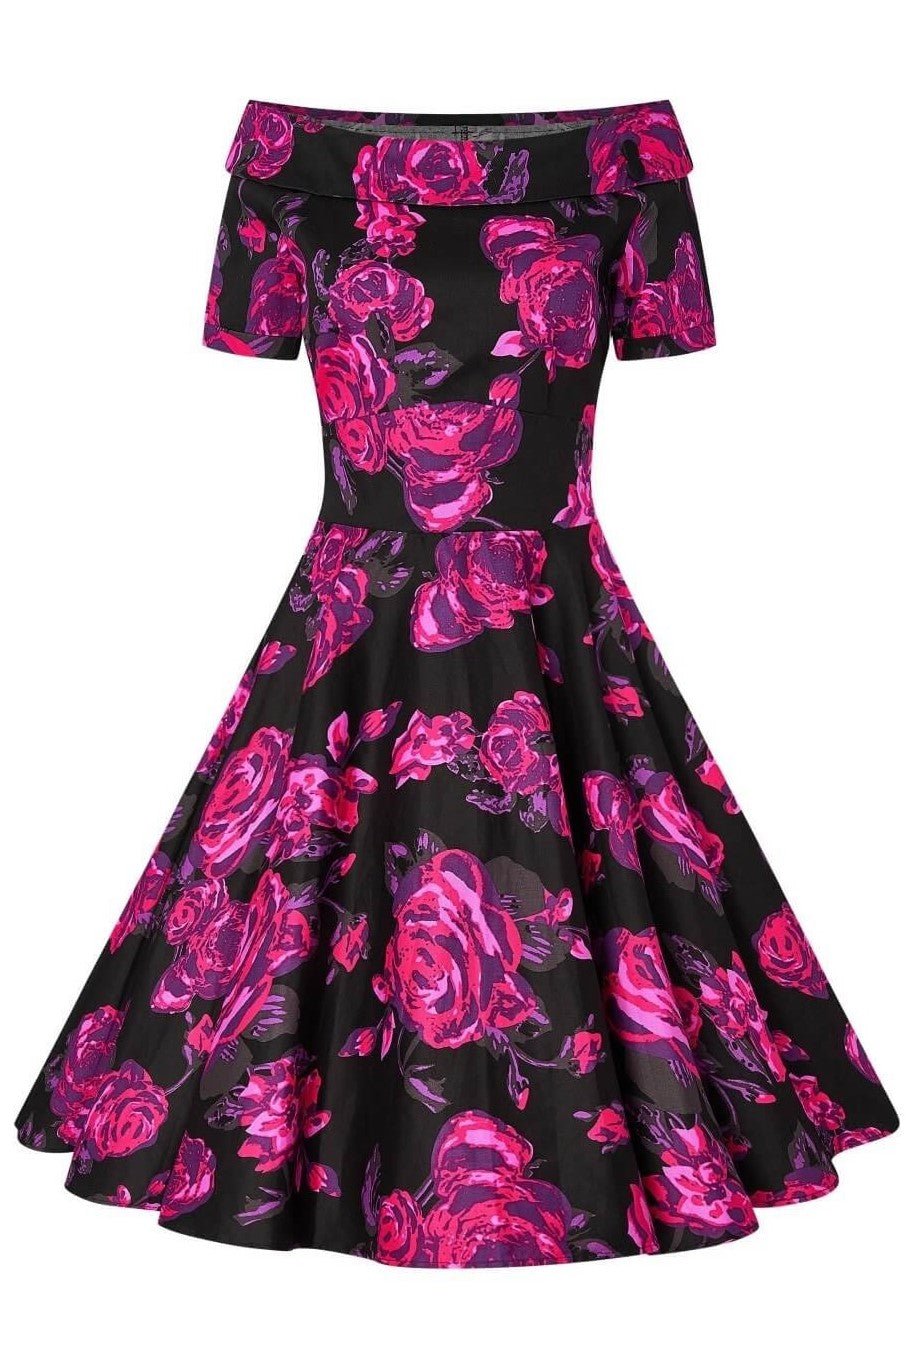 Darlene Retro Black-Pink Roses Swing Dress1